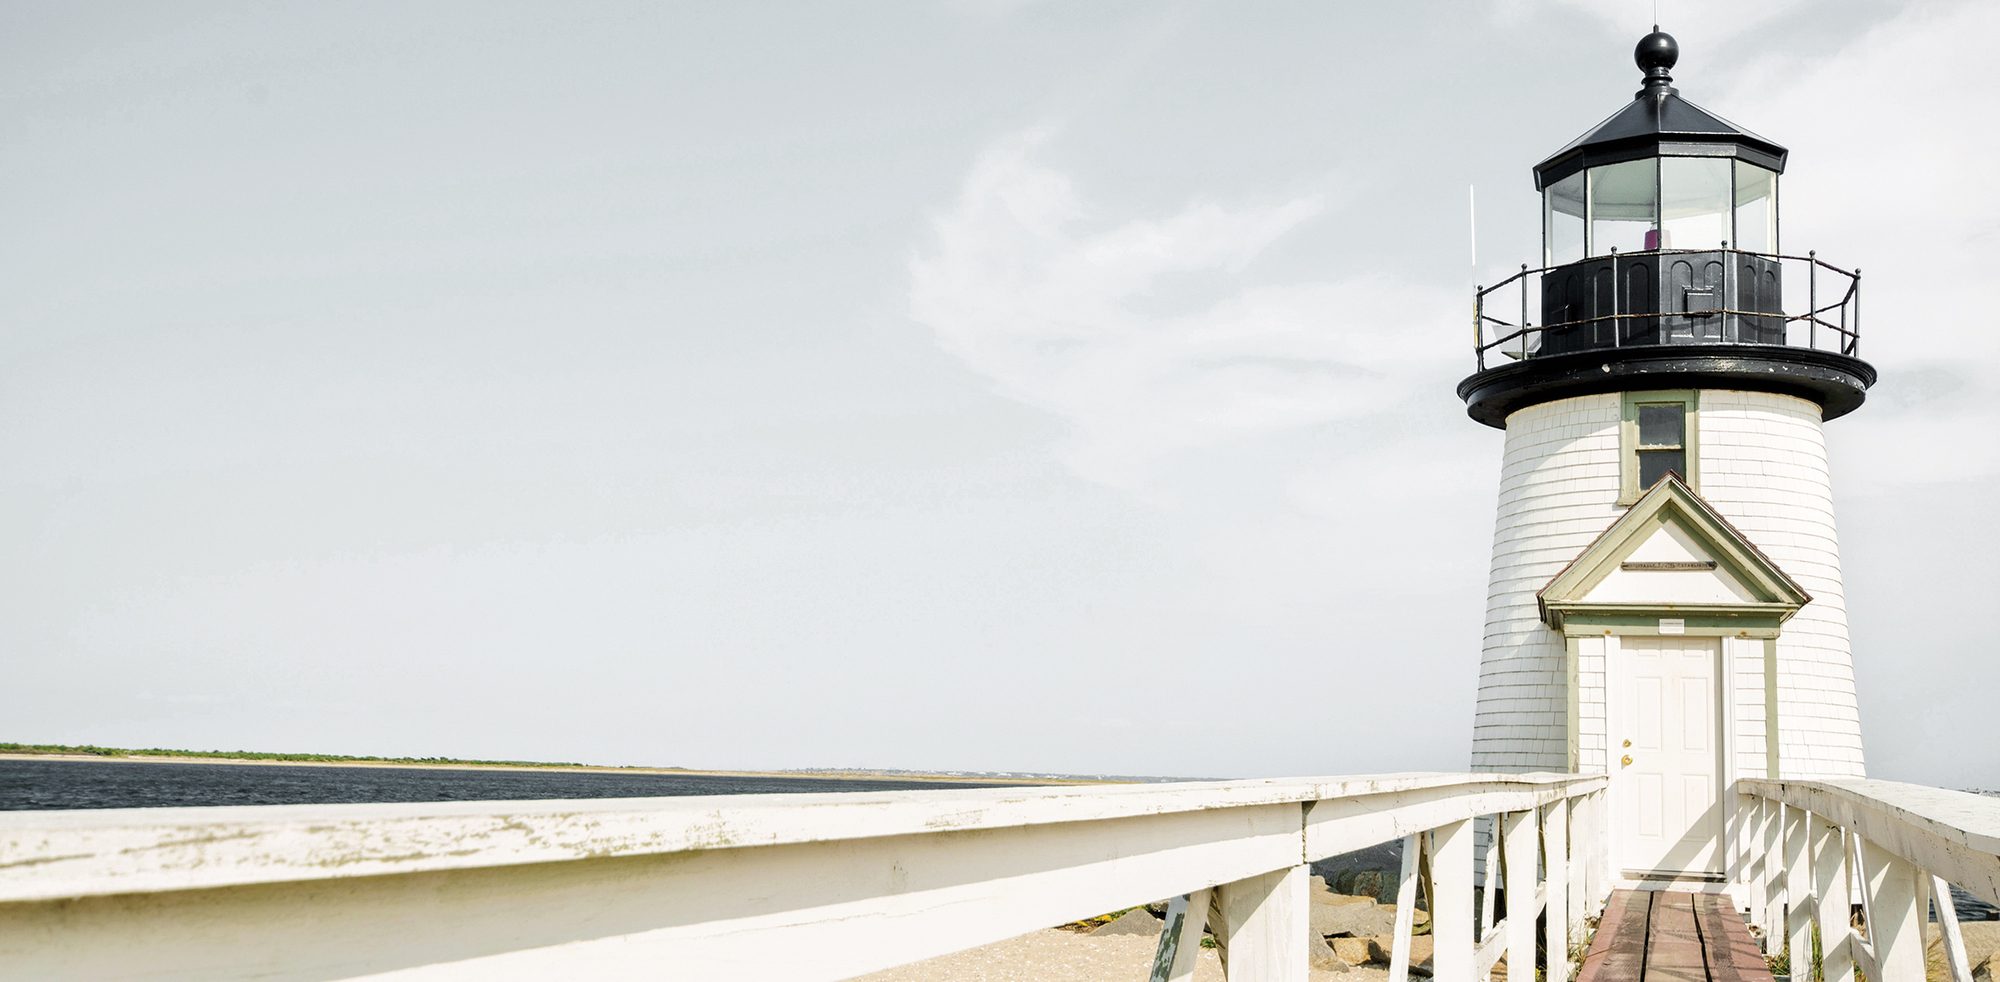 [PWM] Lighthouse